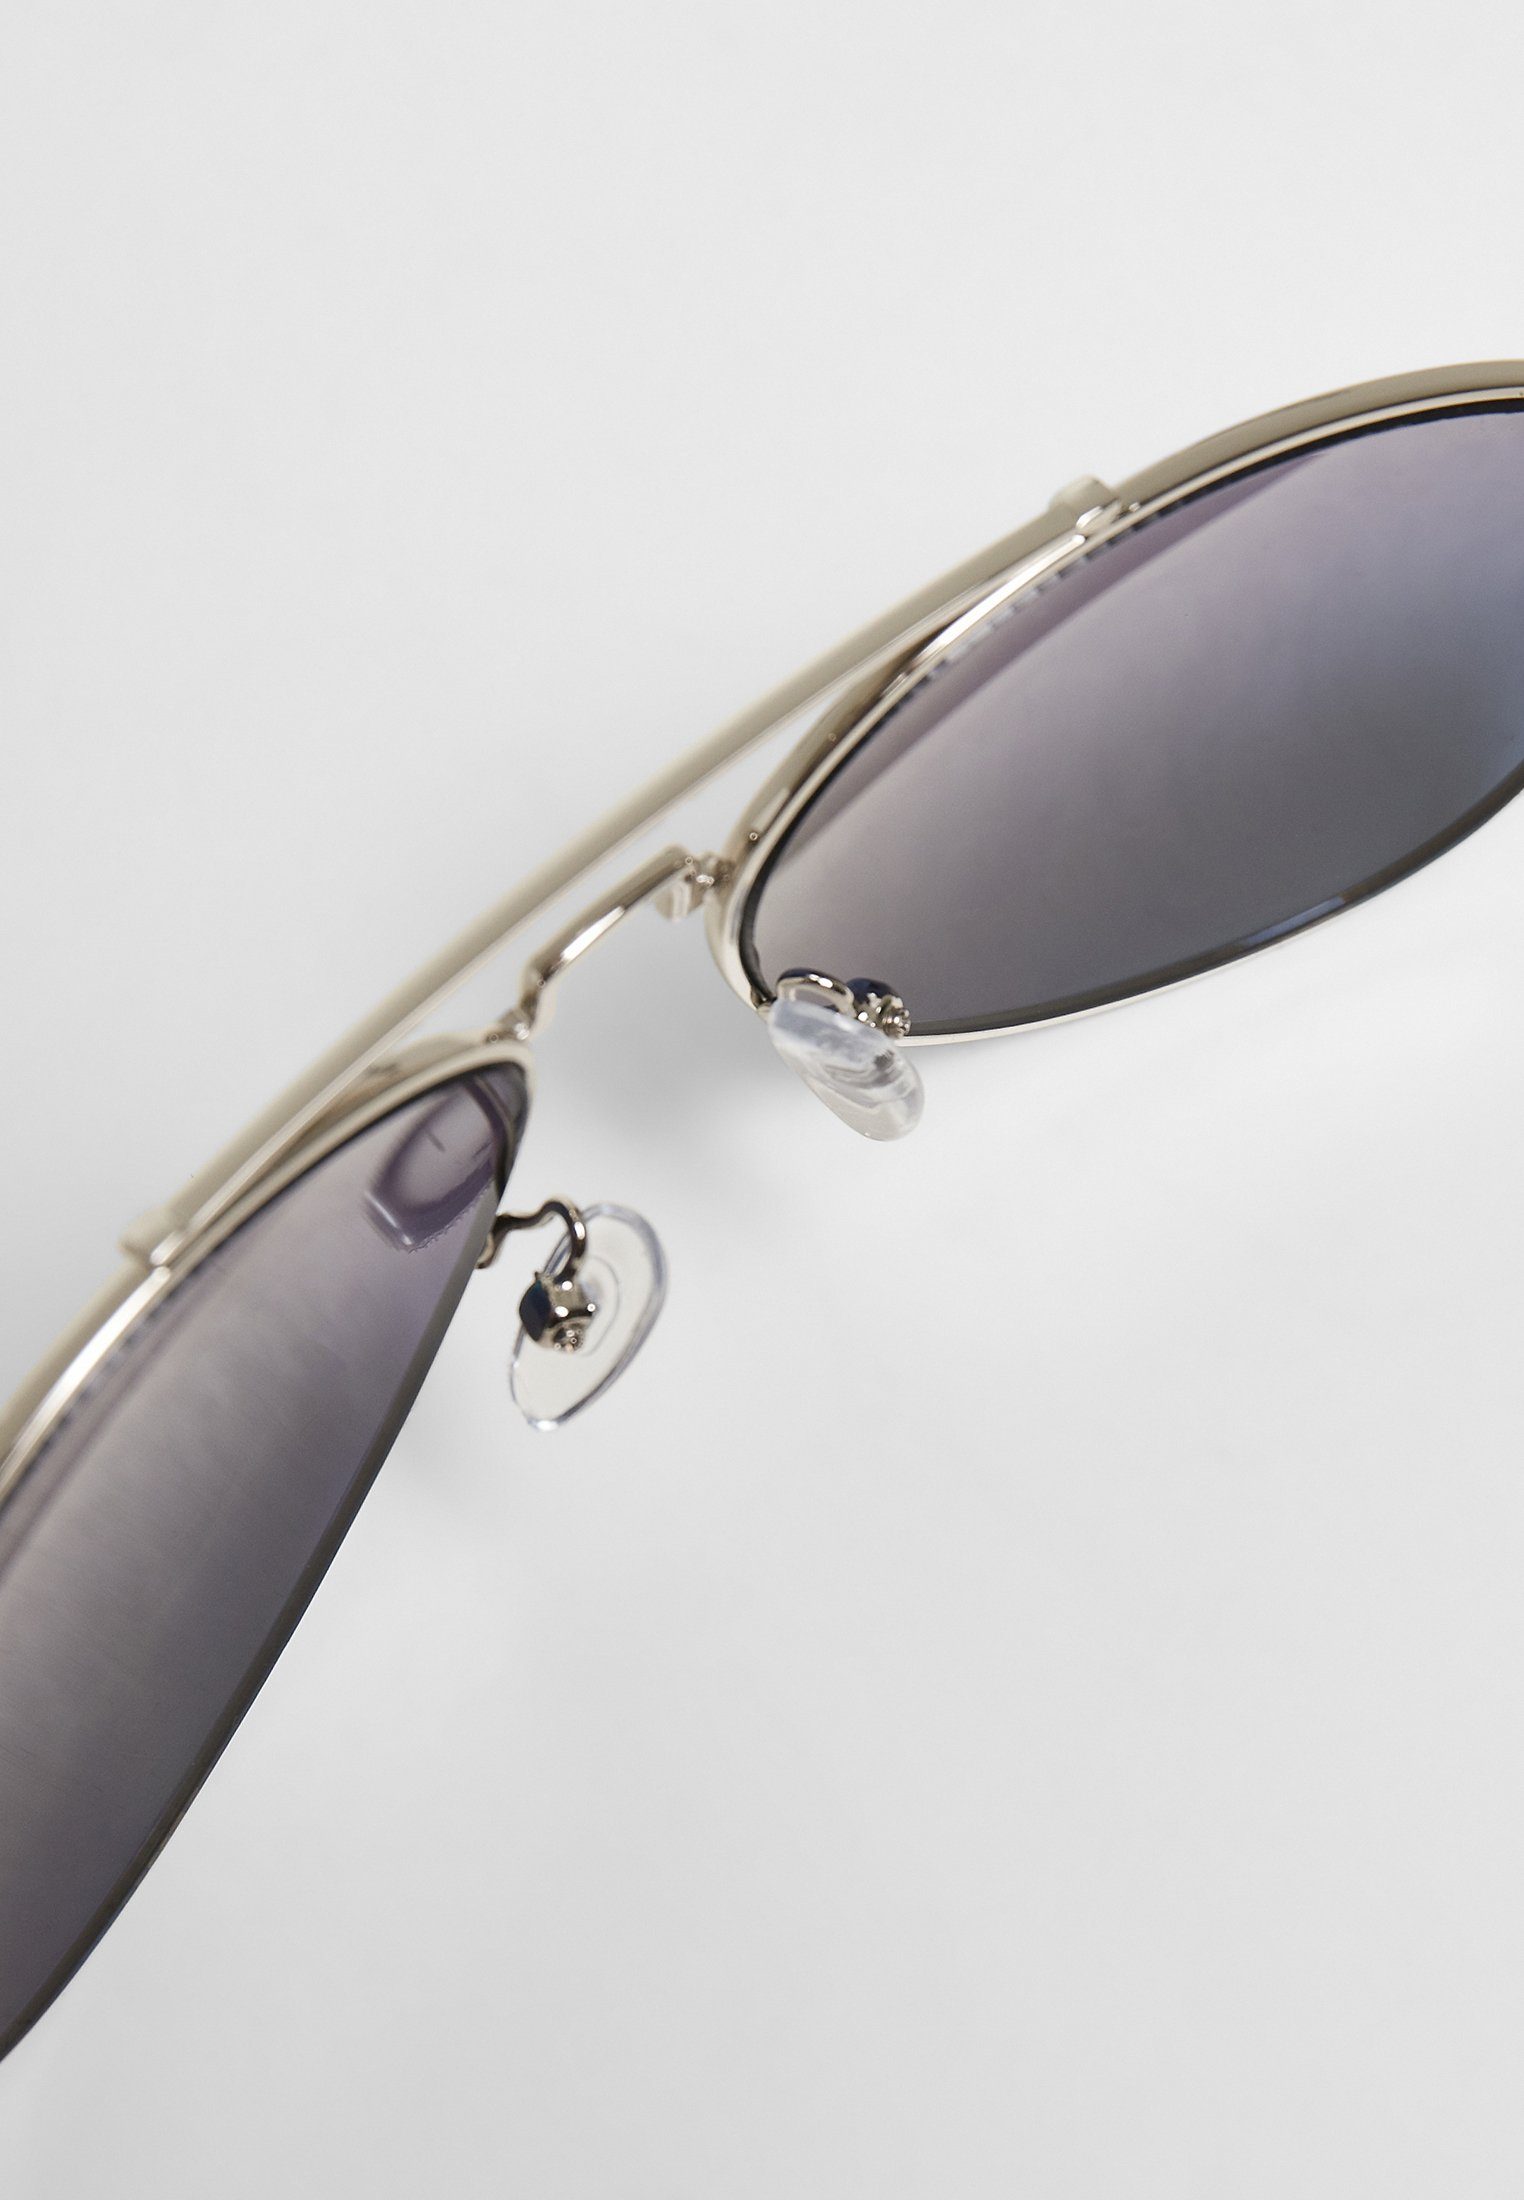 Sonnenbrille Mirror UC silver/orange Sunglasses Mumbo CLASSICS URBAN Accessoires